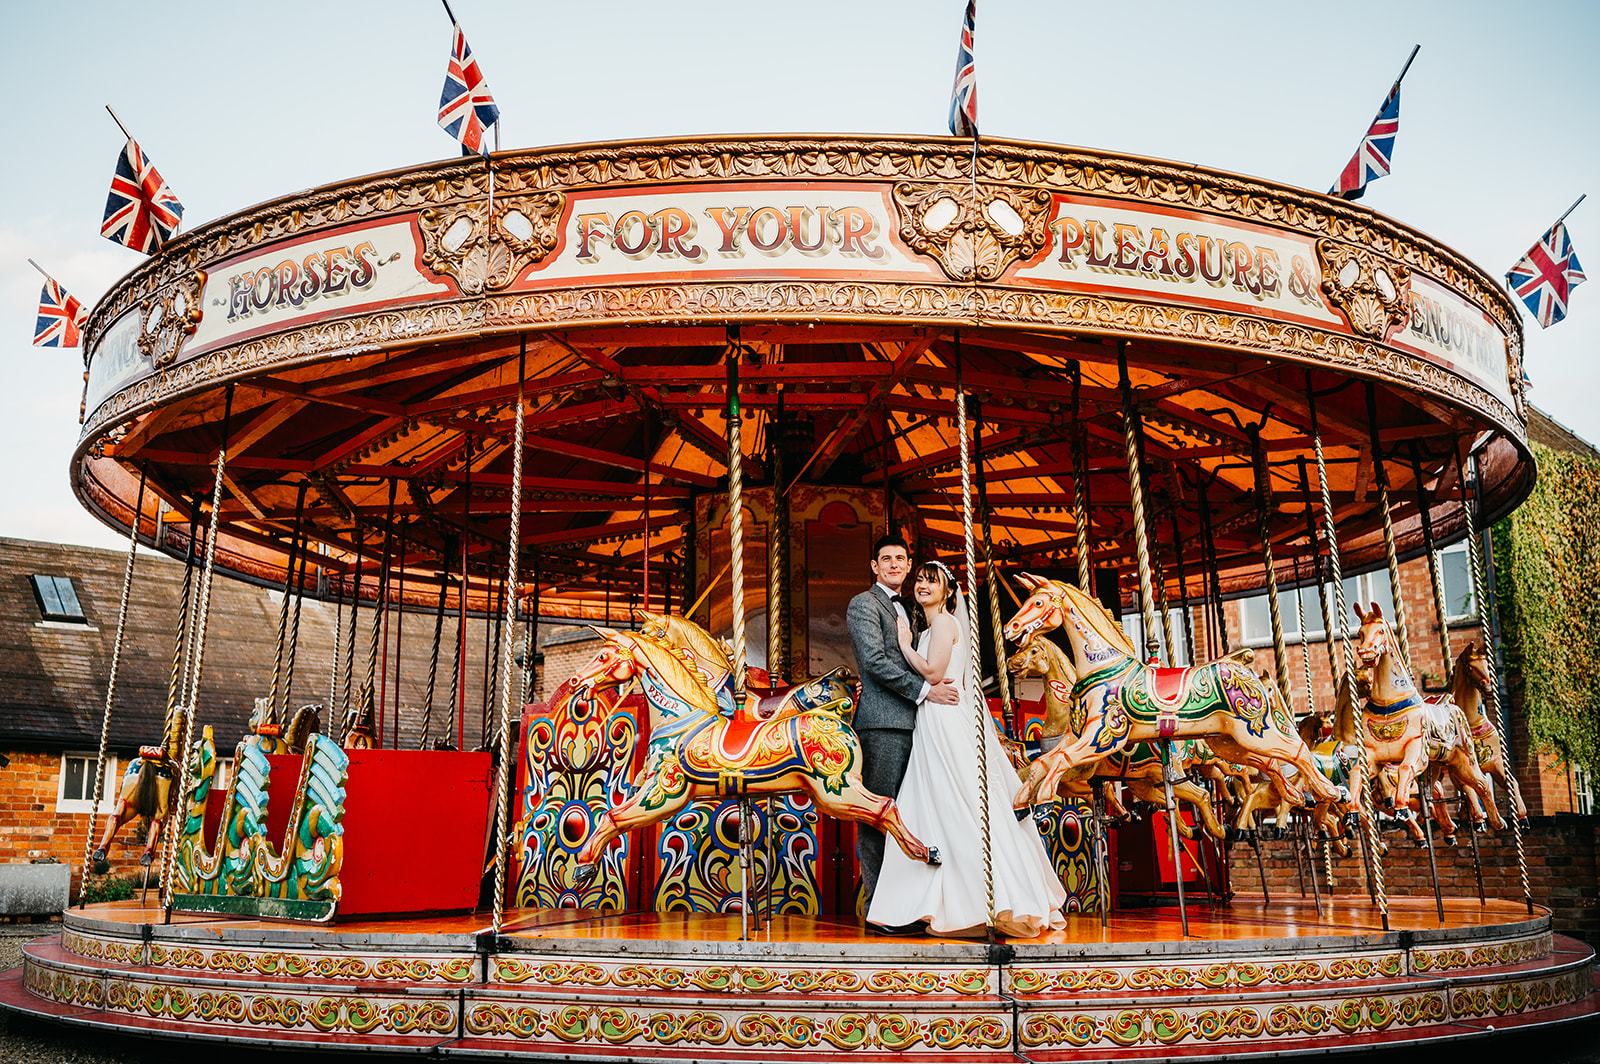 fairground carousel at worcestershire wedding reception